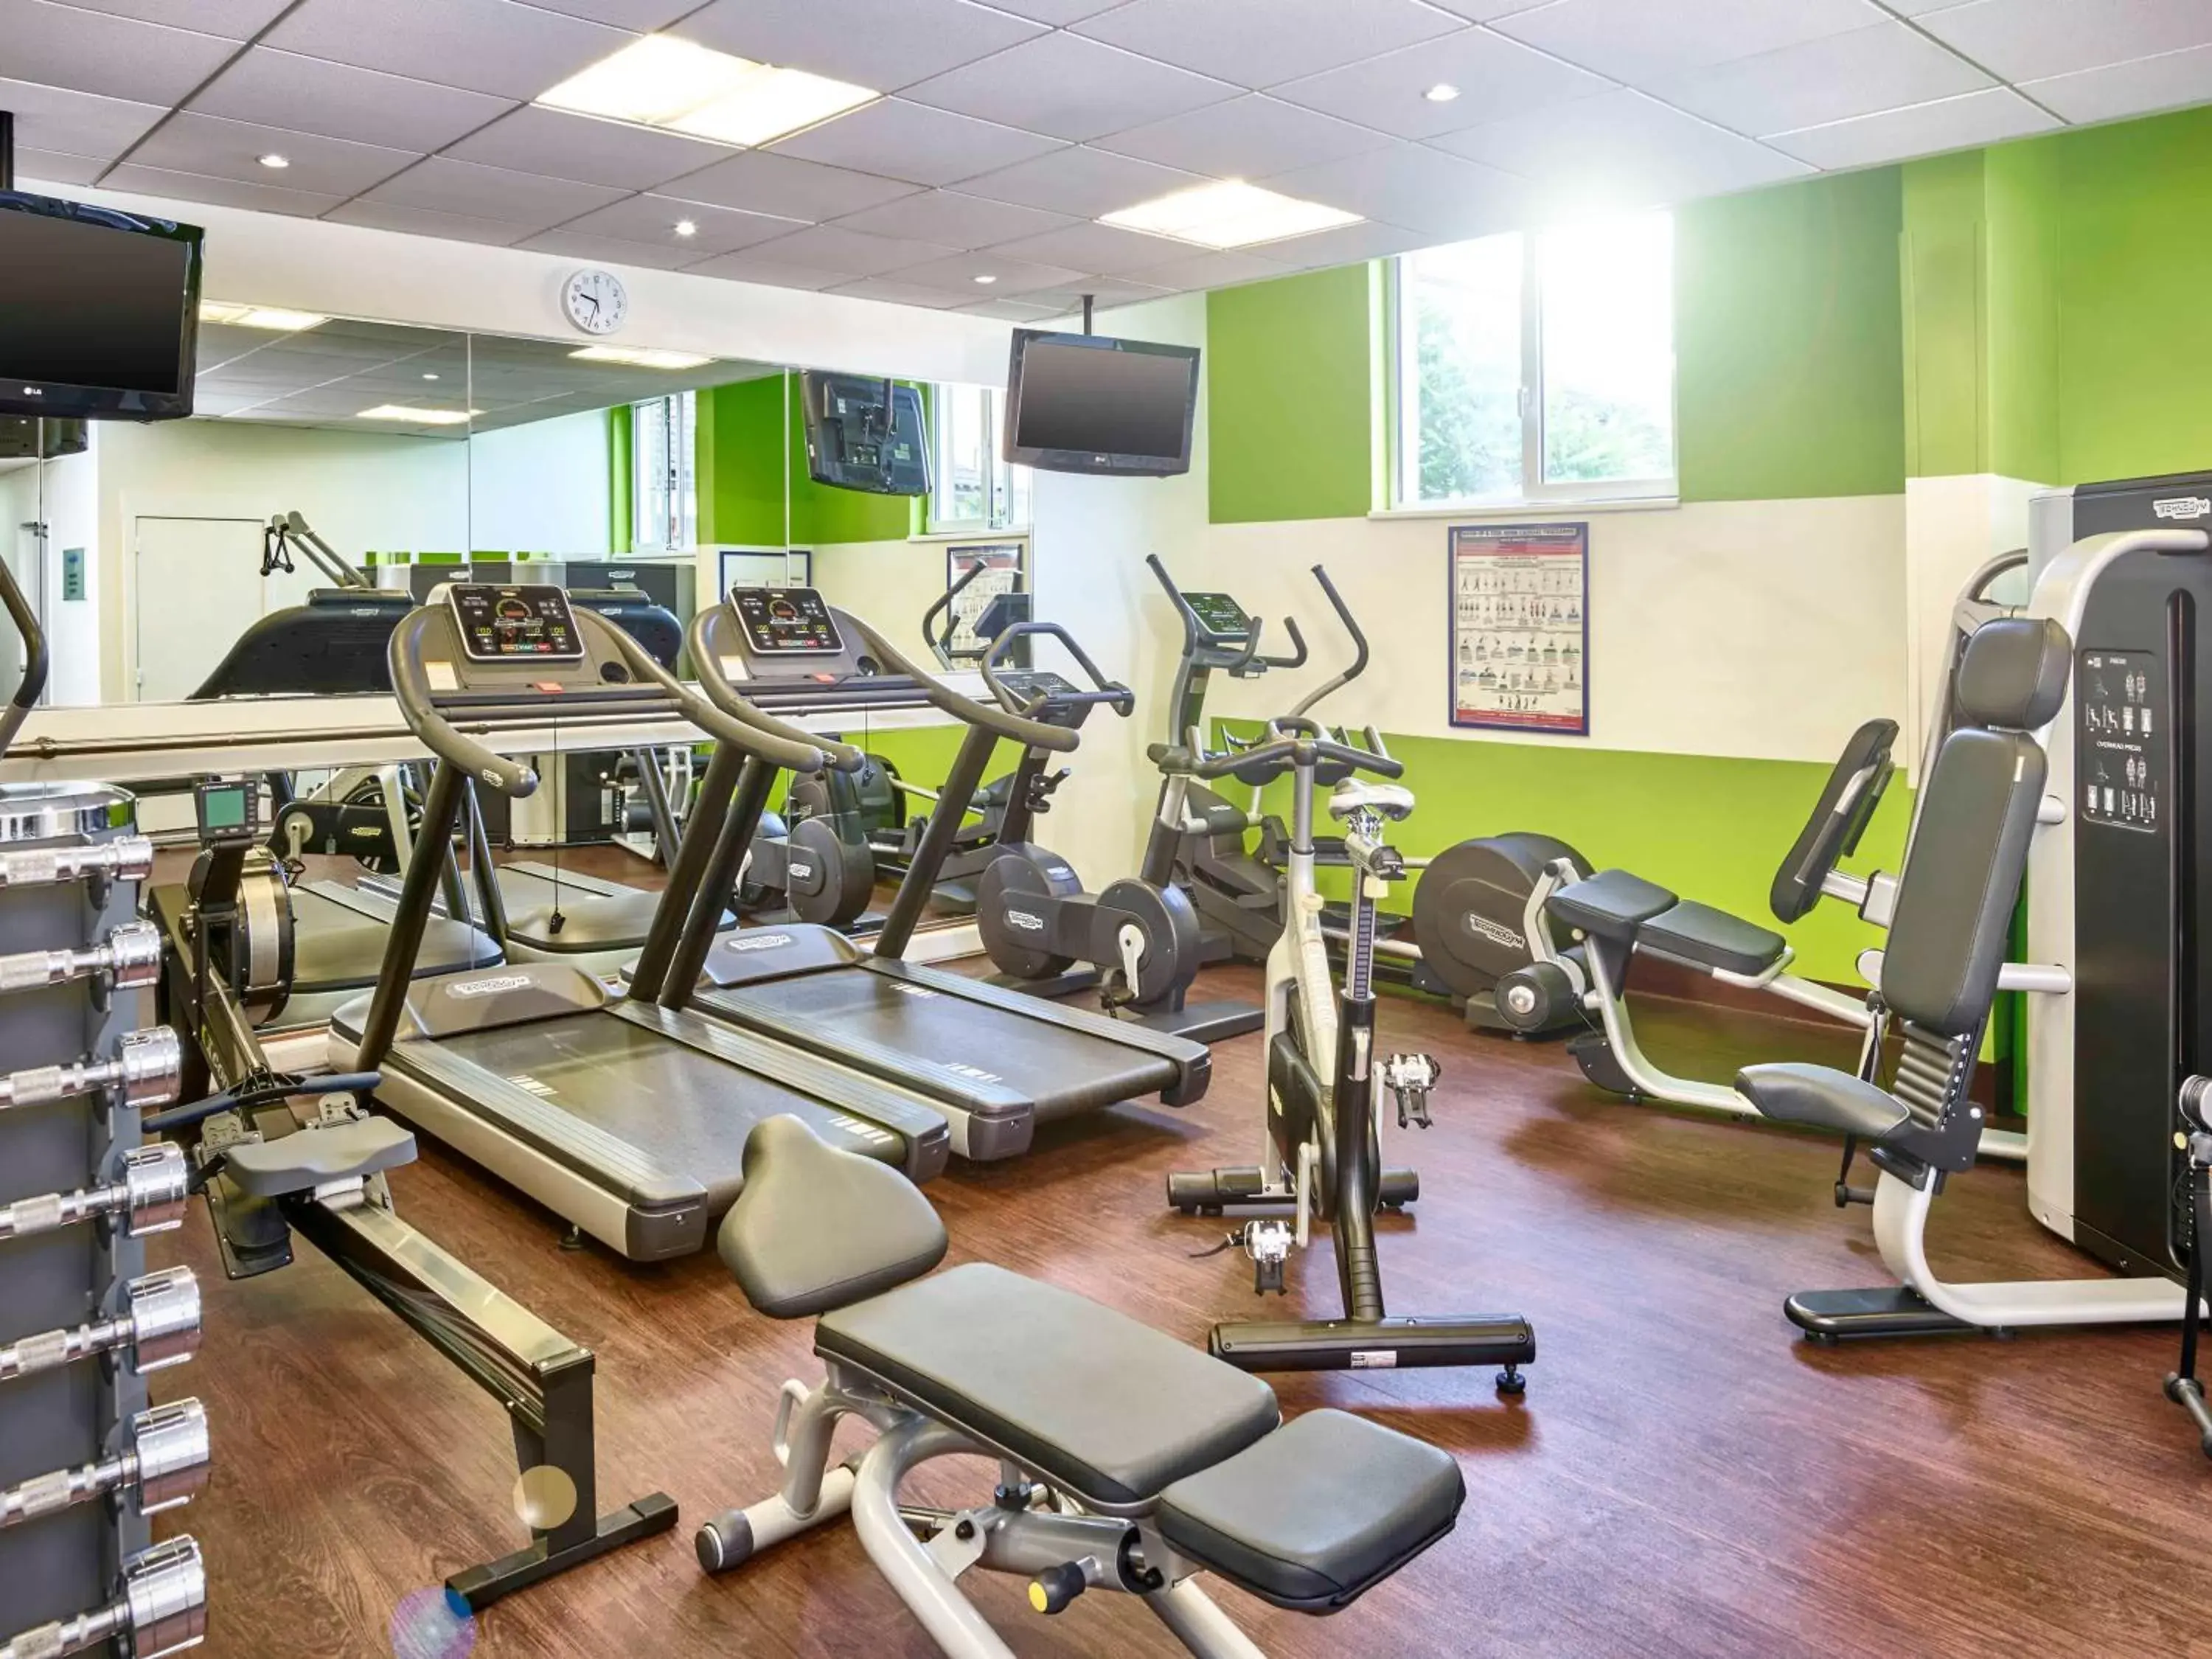 Fitness centre/facilities, Fitness Center/Facilities in Novotel Milton Keynes